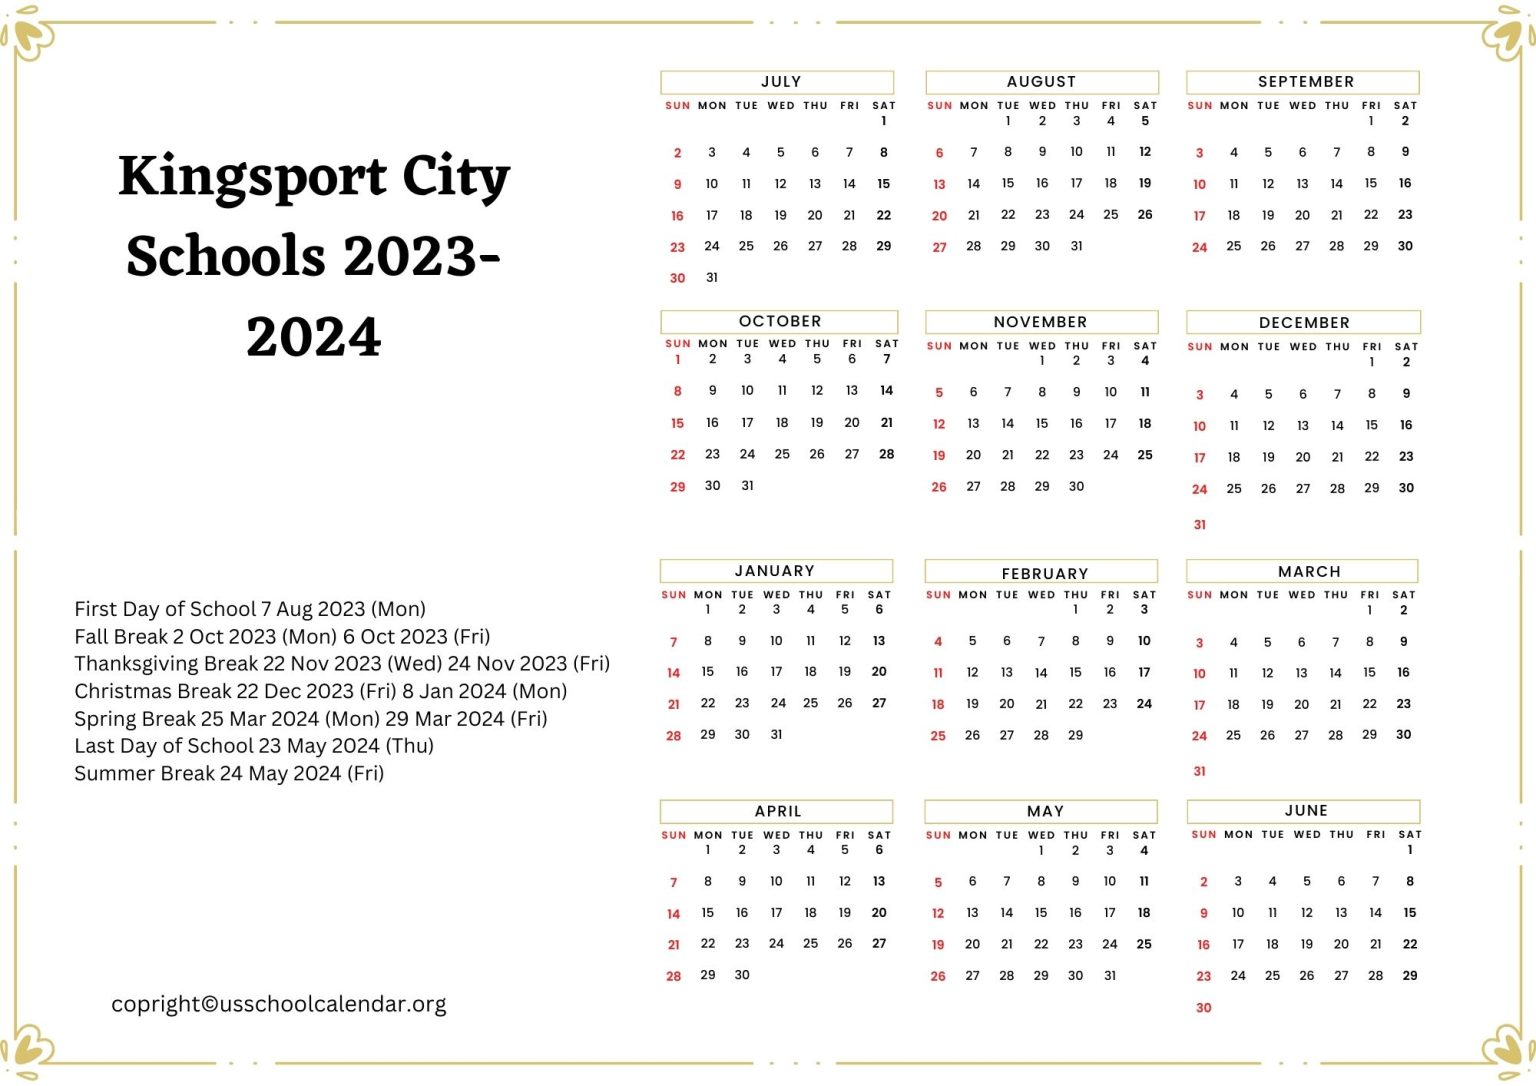 kingsport-city-schools-calendar-with-holidays-2023-2024